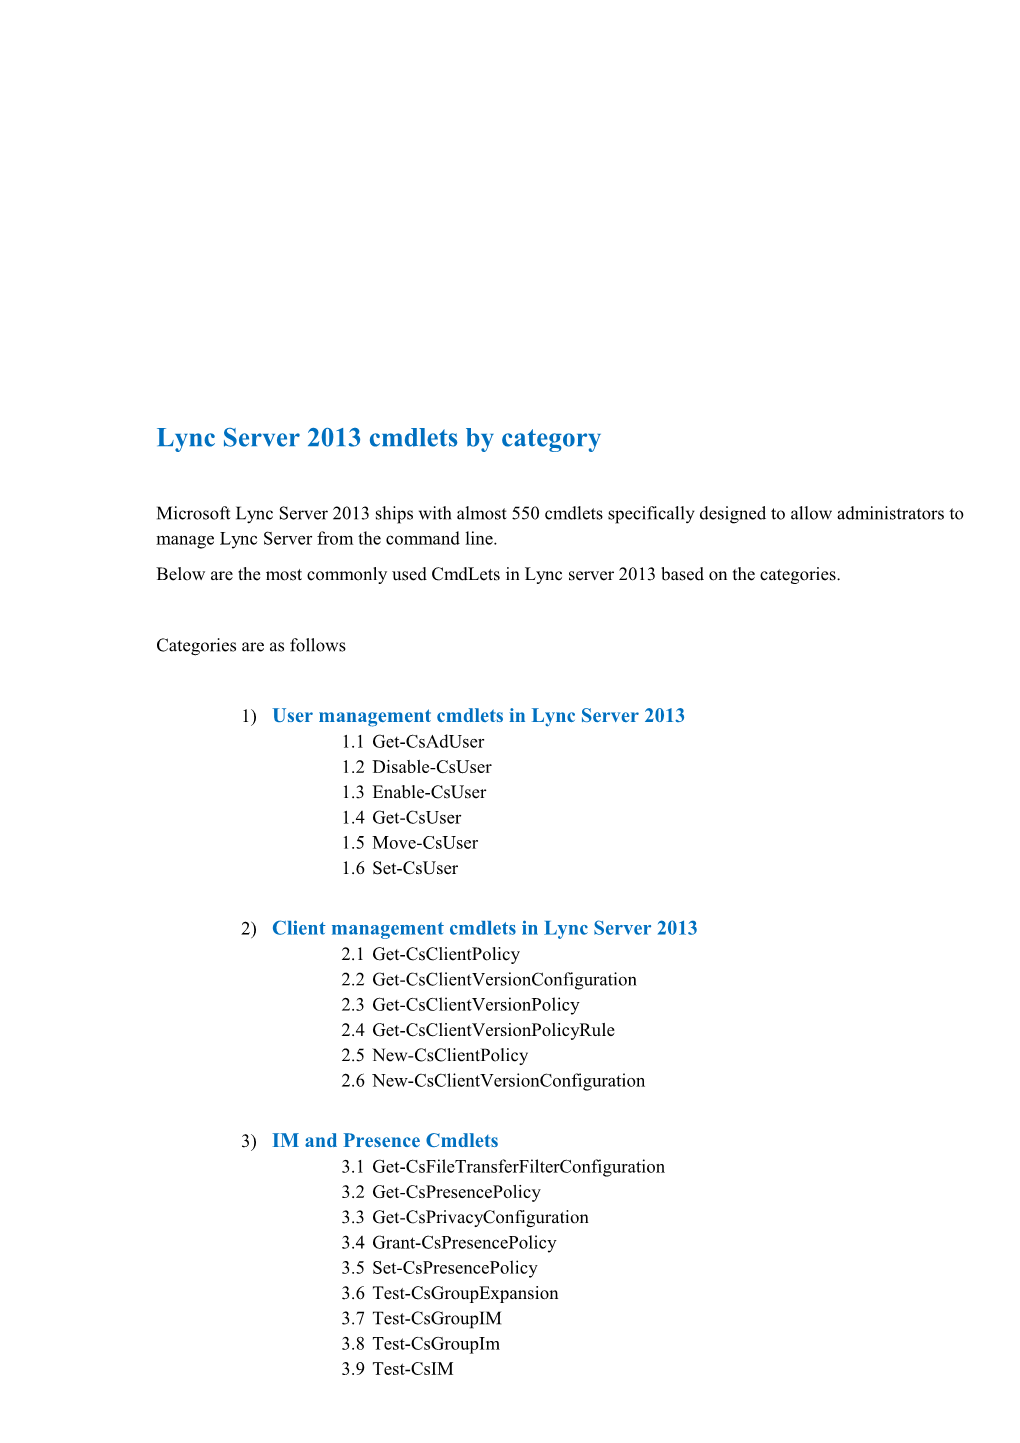 Lync Server 2013 Cmdlets by Category